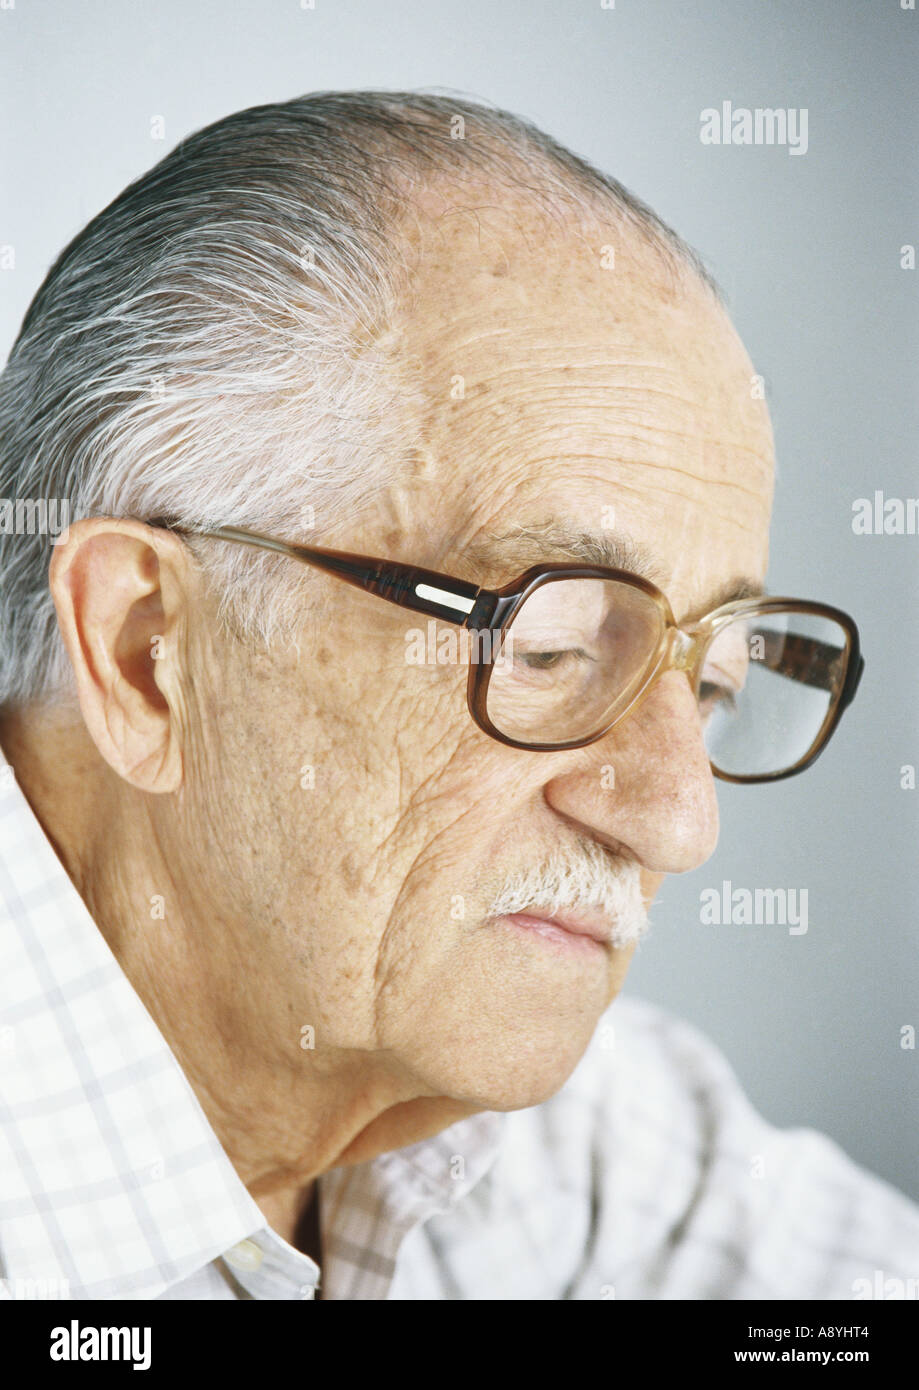 Elderly man wearing glasses Stock Photo